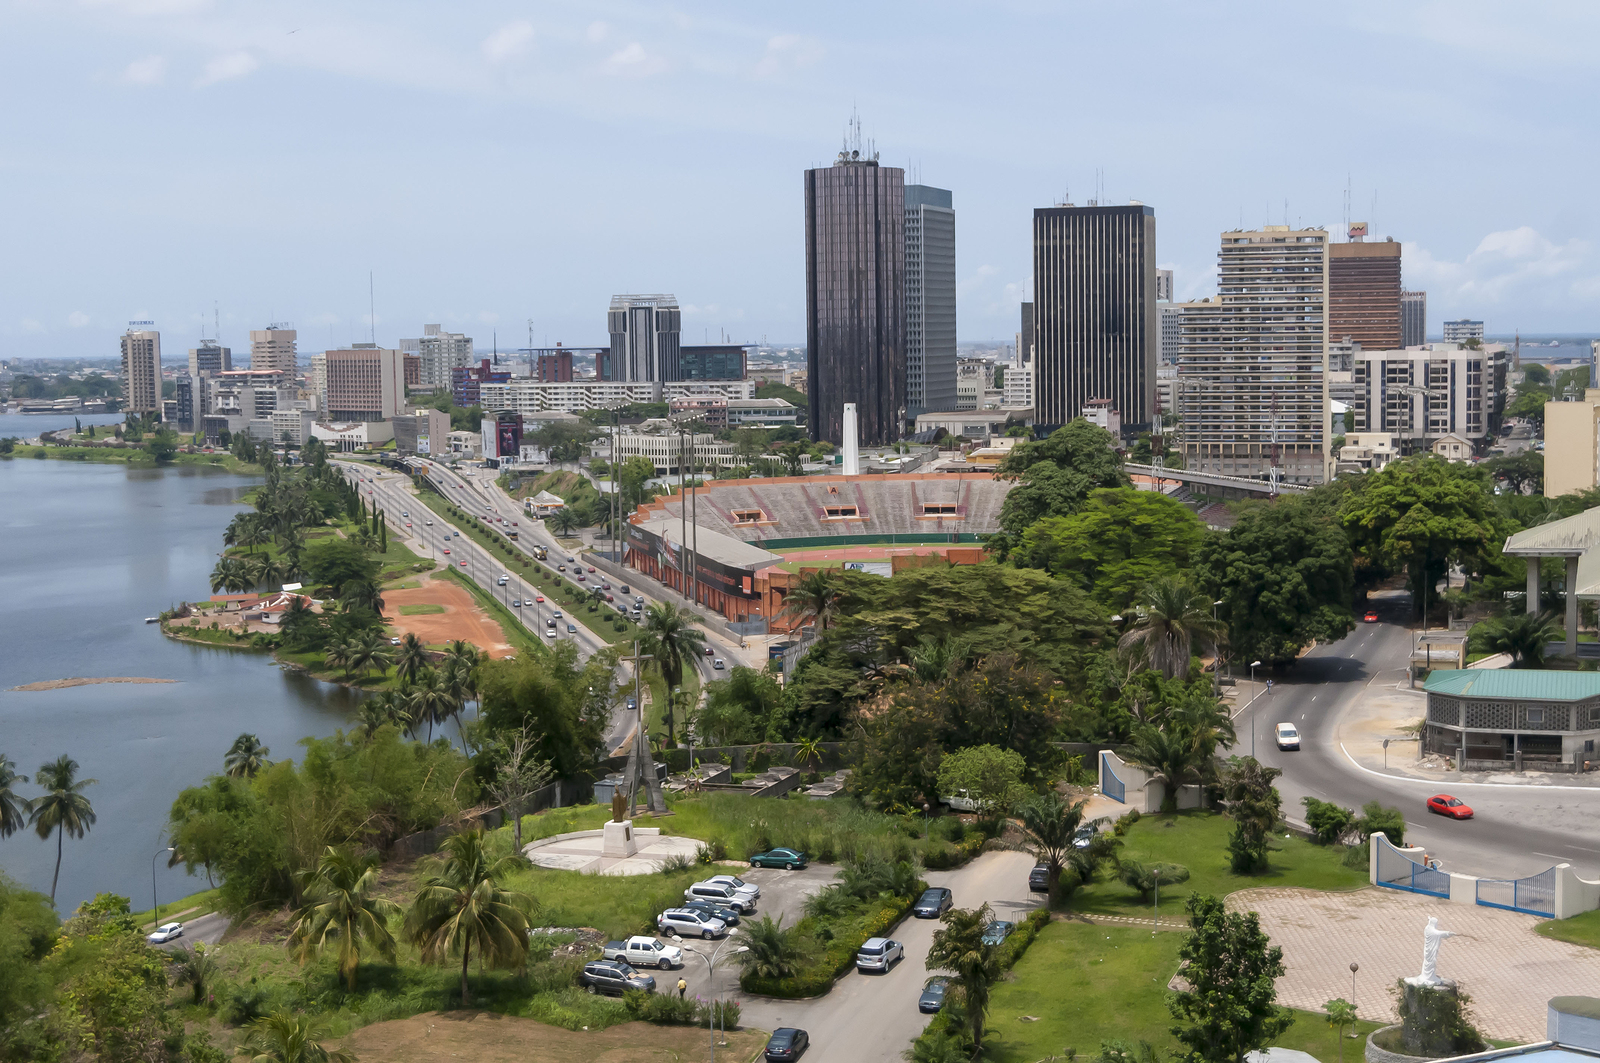 Abidjan in Ivory Coast